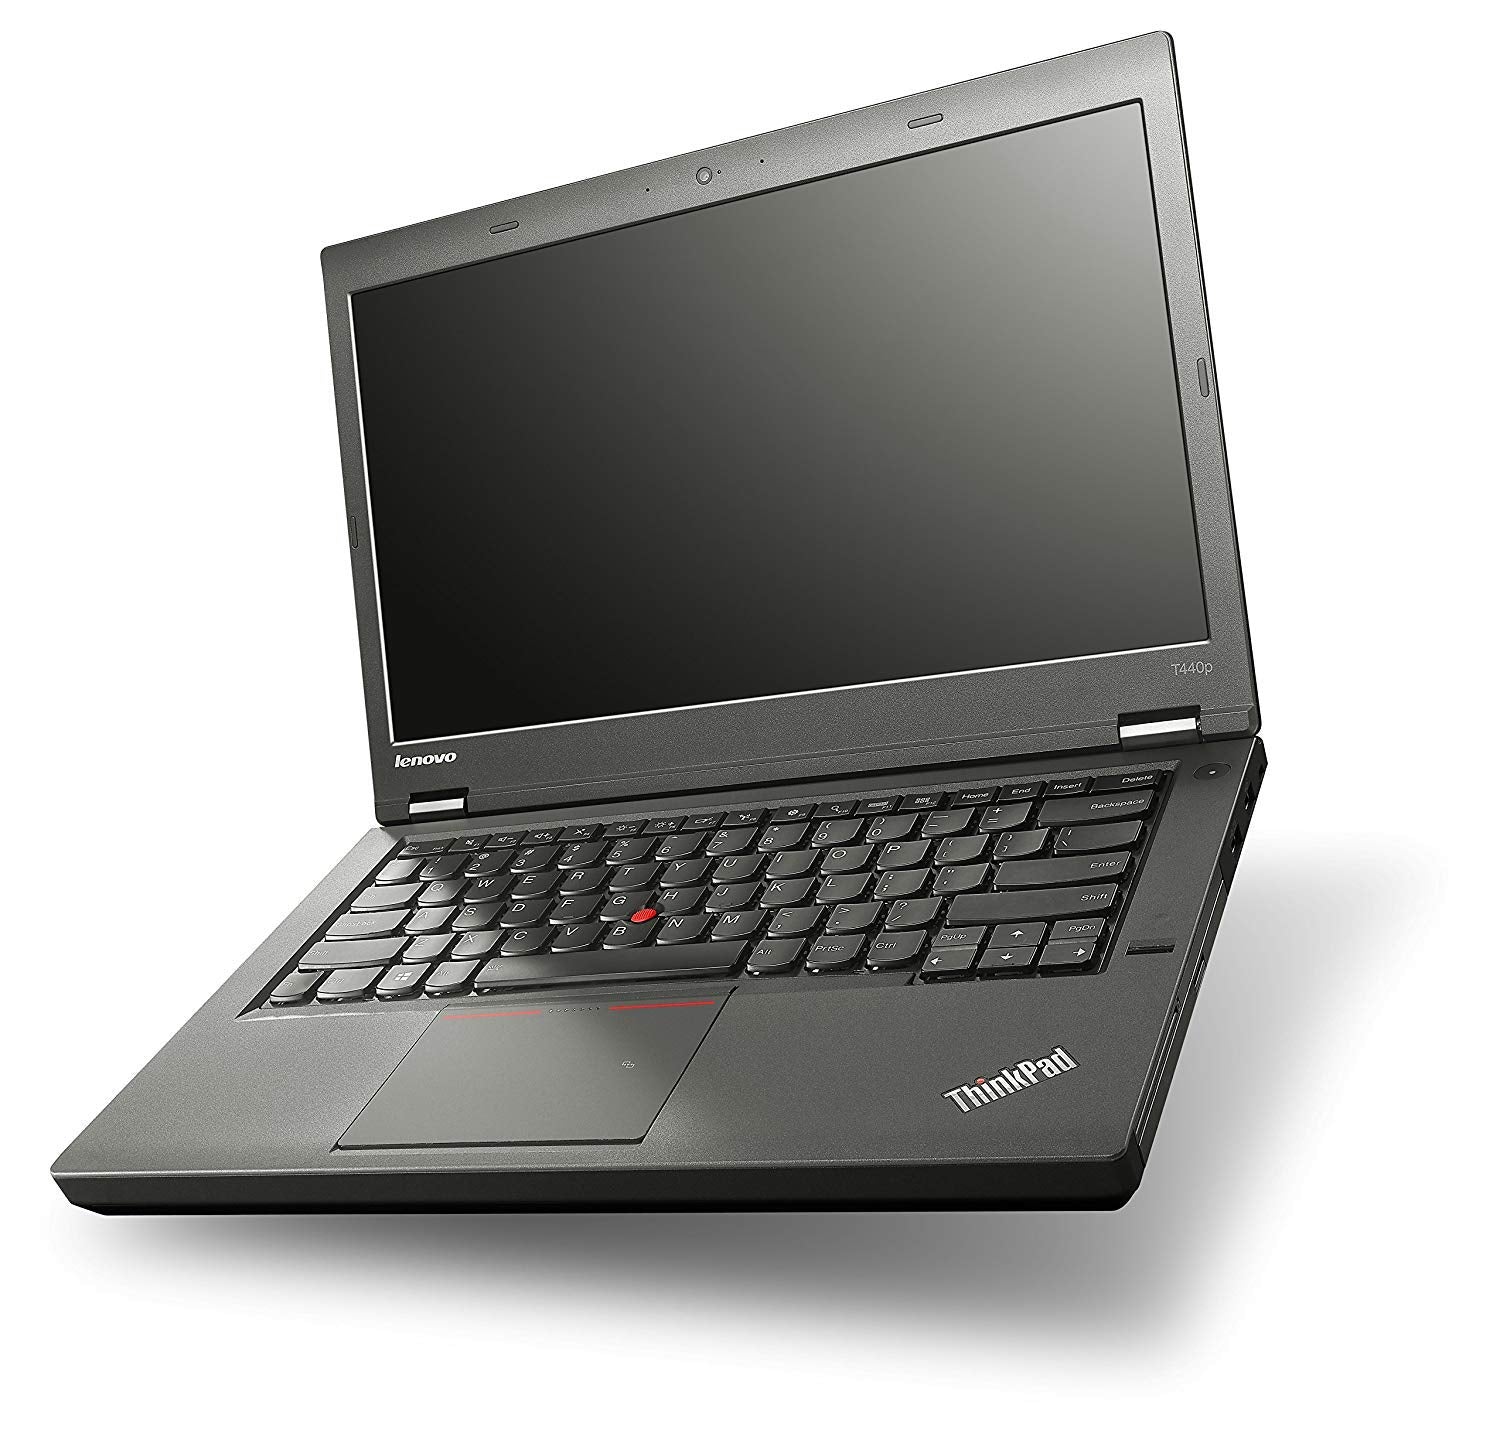 Refurbished Lenovo ThinkPad T440P i7 Laptop, 4th Gen, 8GB Ram, 256GB SSD